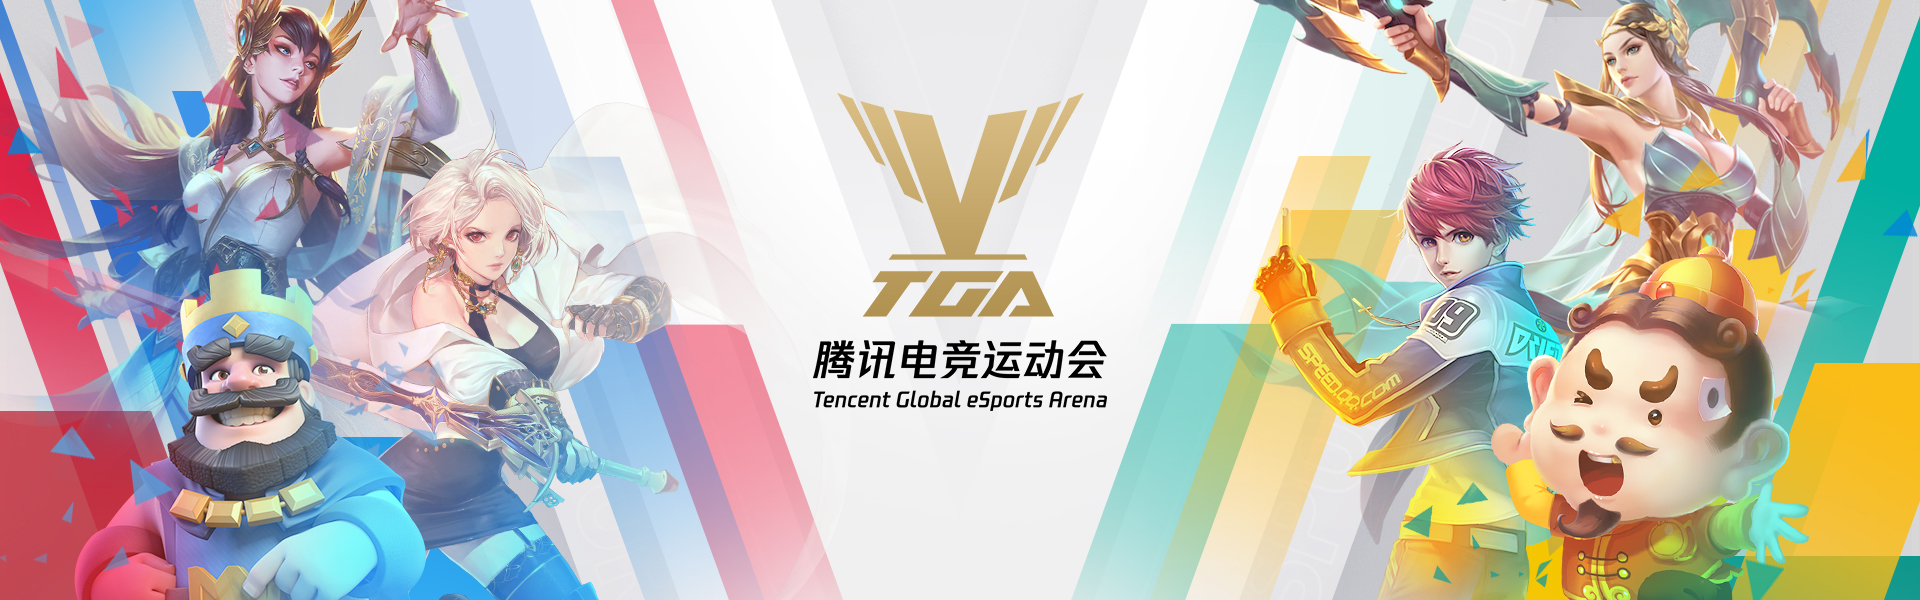 TGA腾讯电竞运动会落地杭州 七大赛事接力登场